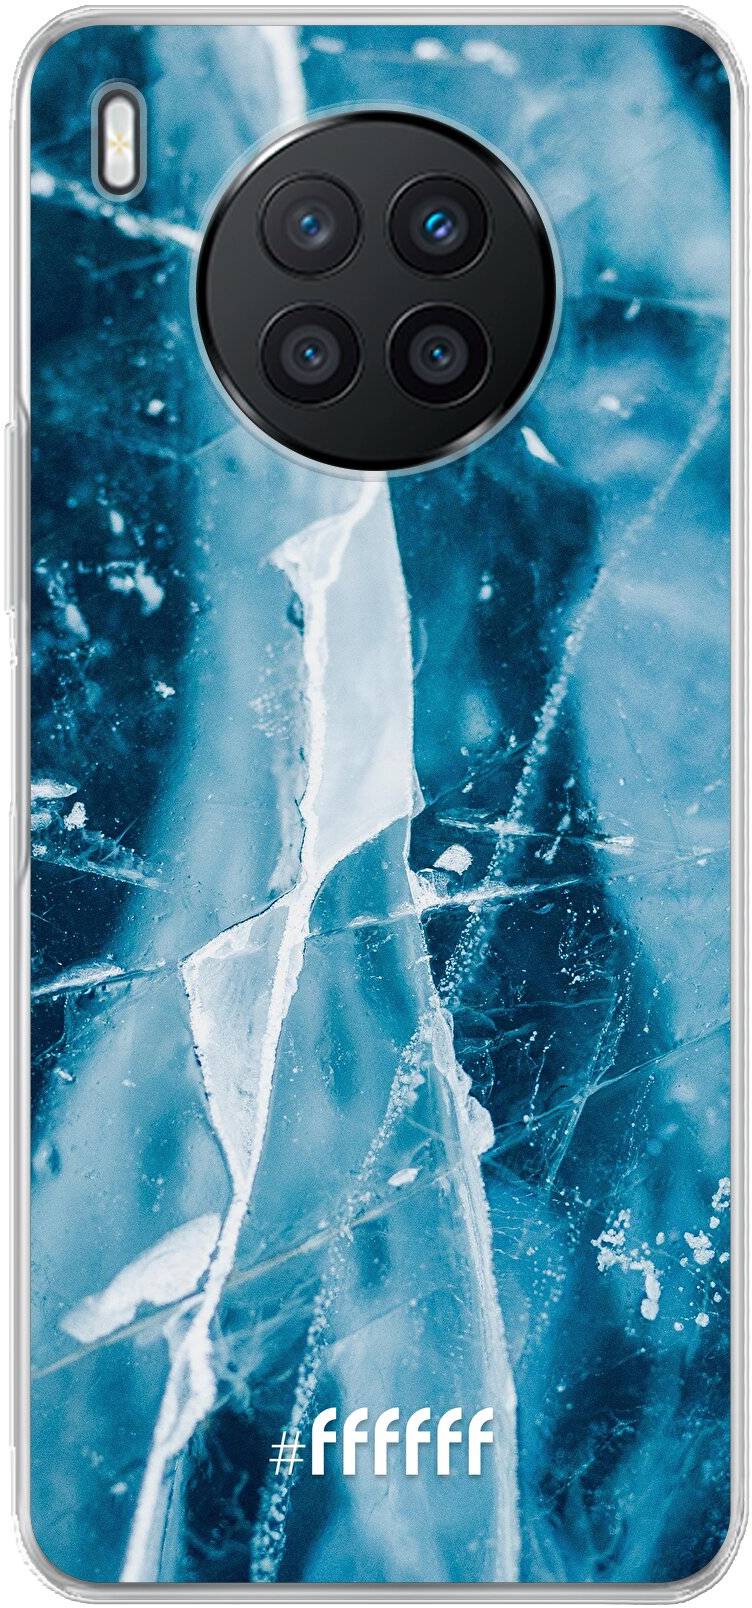 Cracked Ice Nova 8i